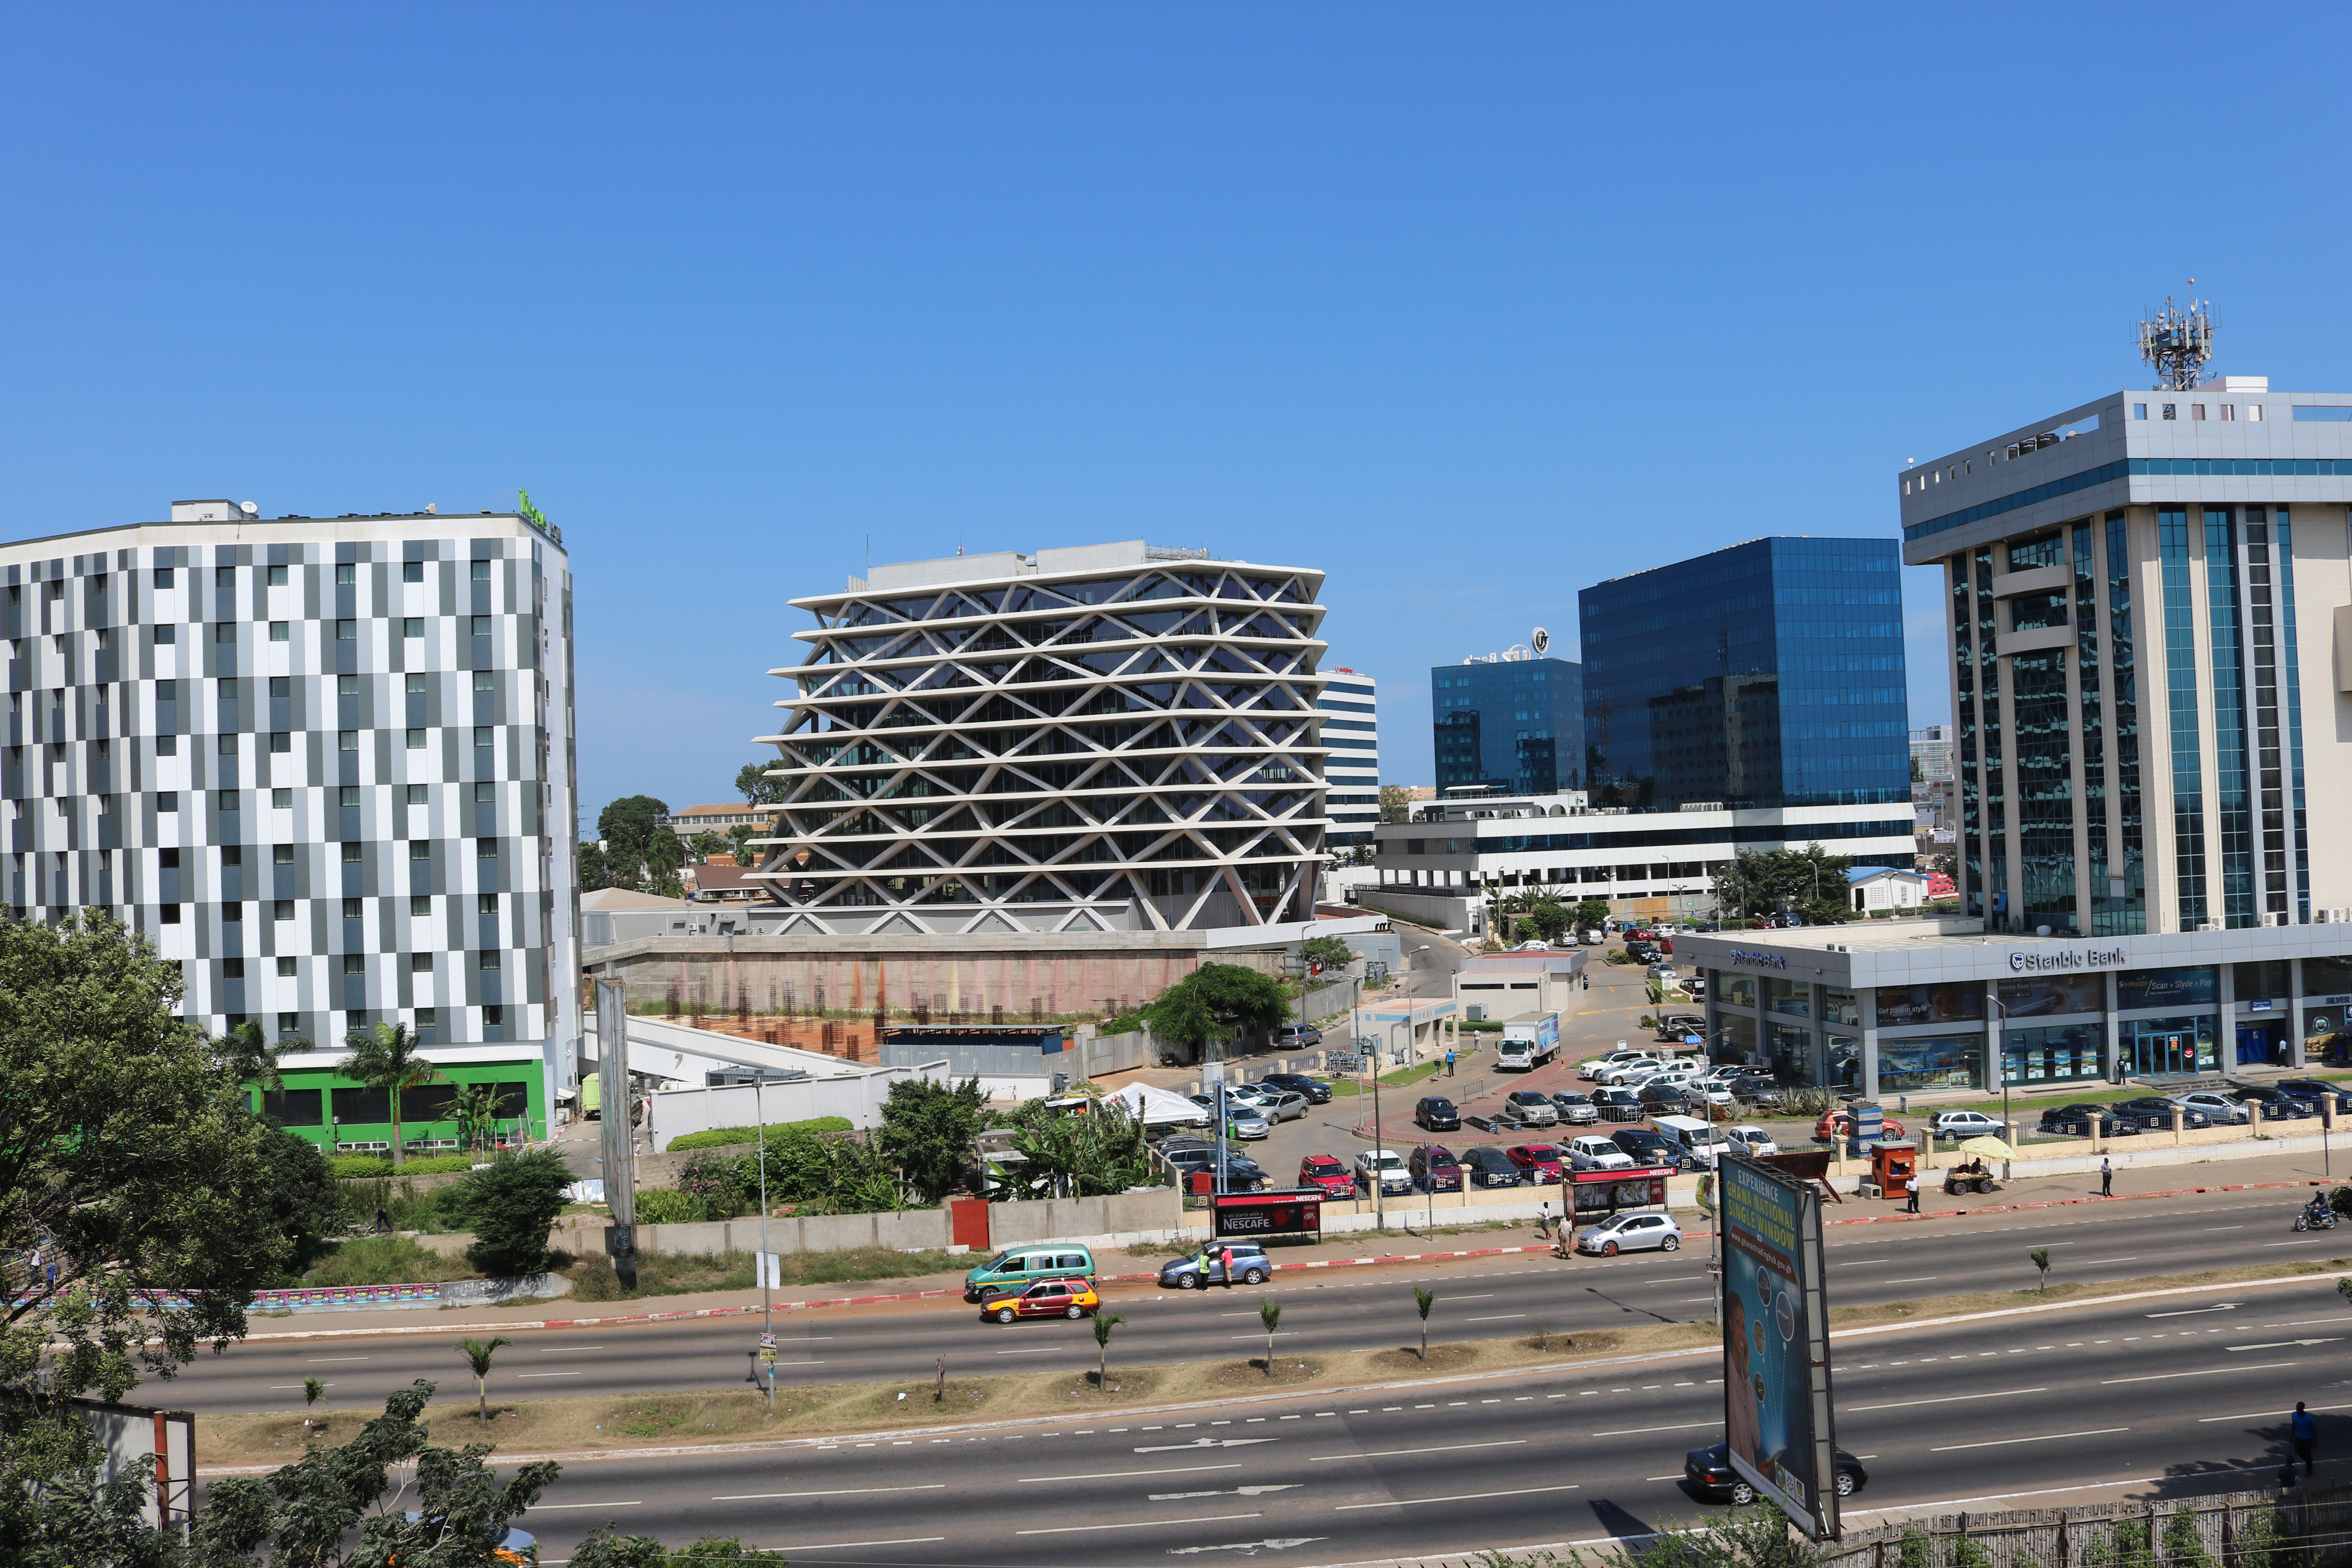 Африканская столица 5. Столица Ганы Аккра. Африка Аккра. Аккра (гана, Западная Африка). Столица Ганы Аккра фото.